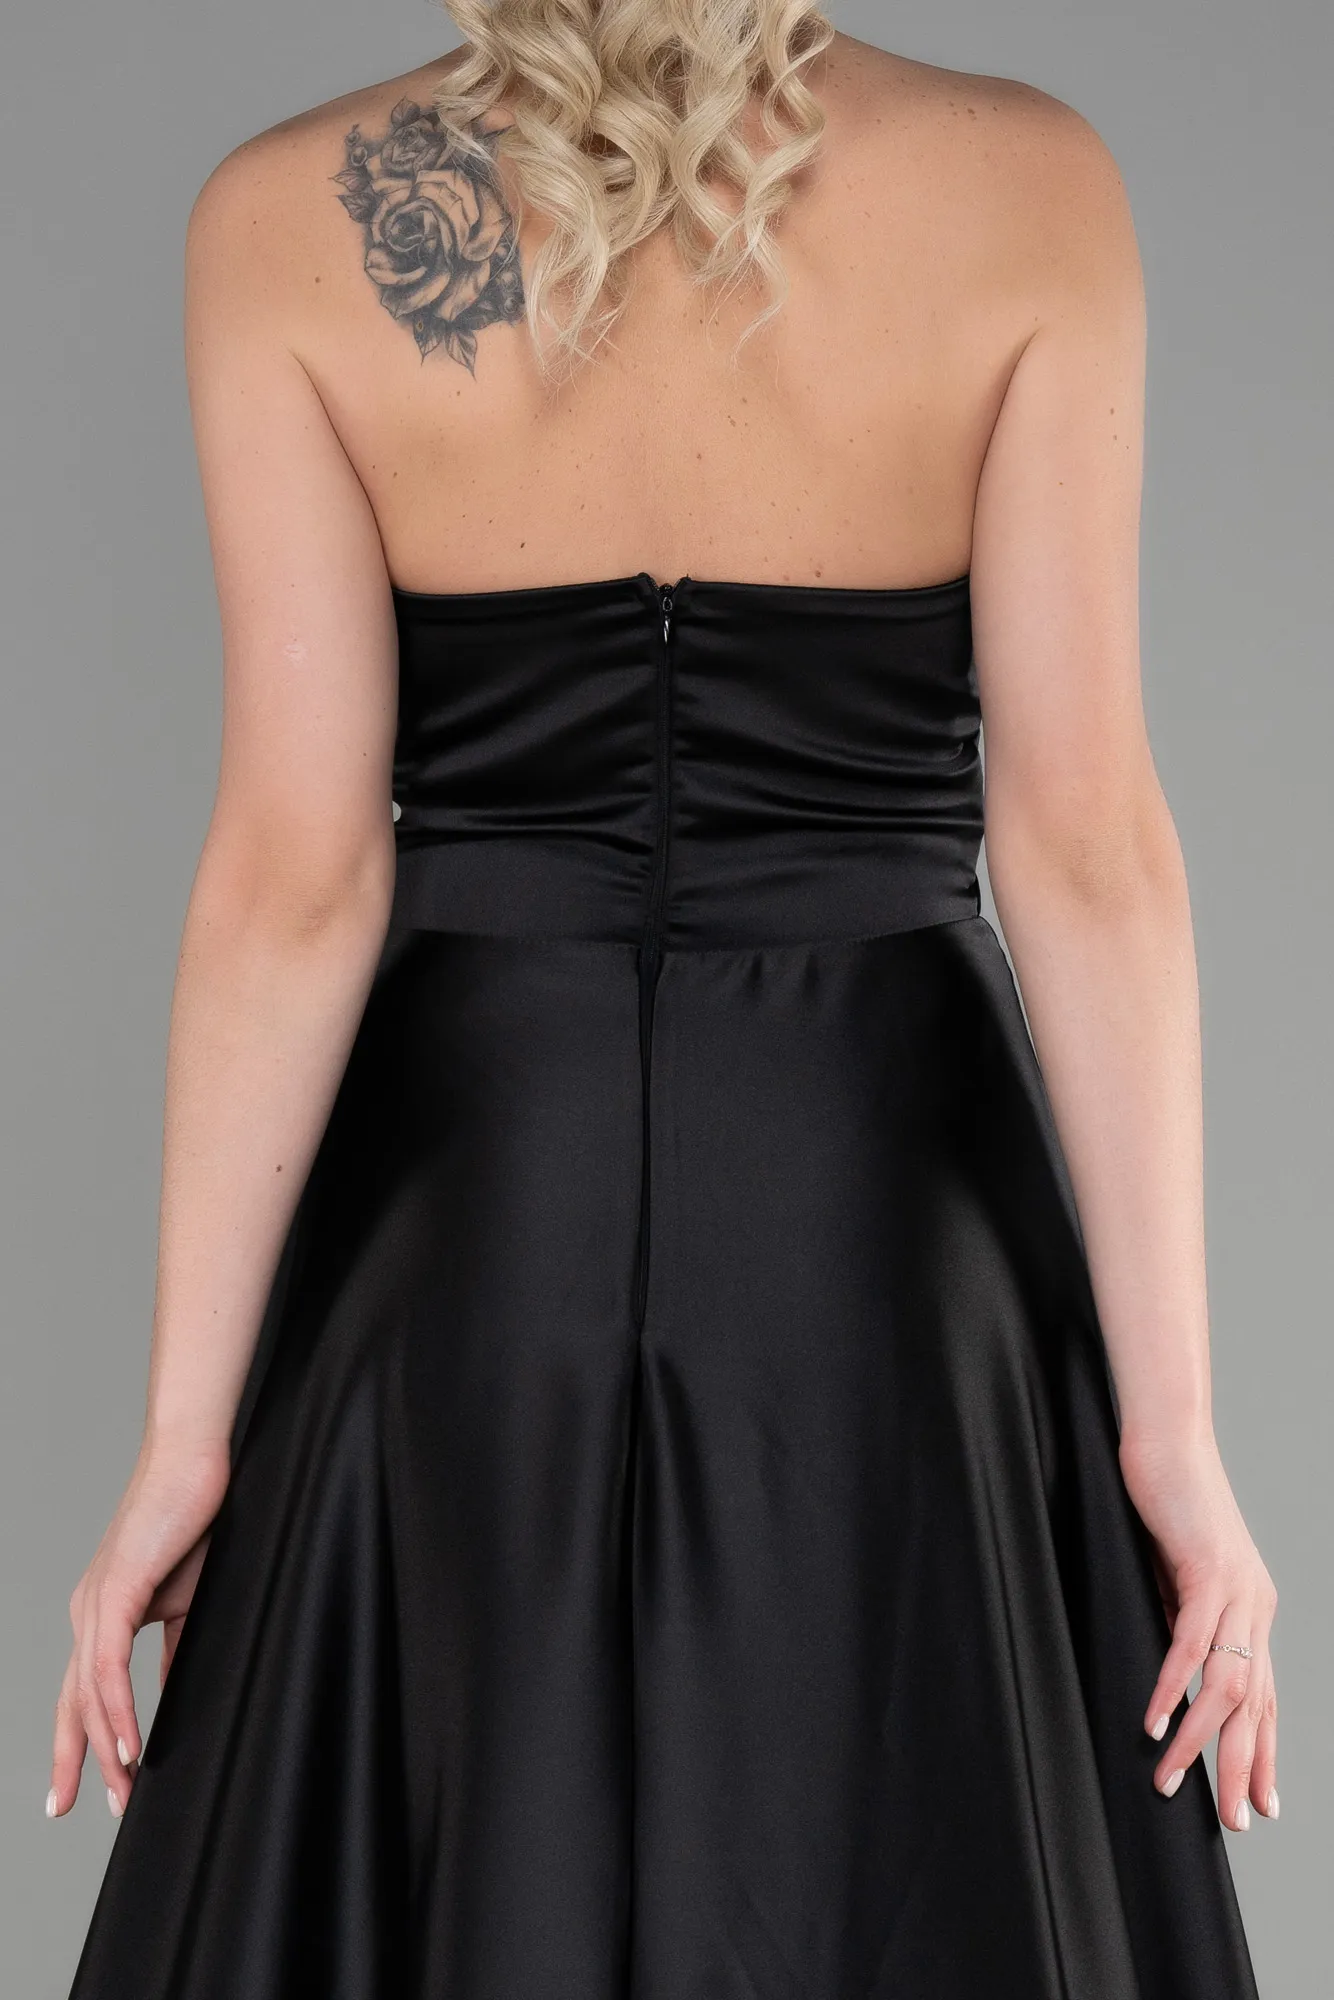 Black-Long Satin Evening Dress ABU3385